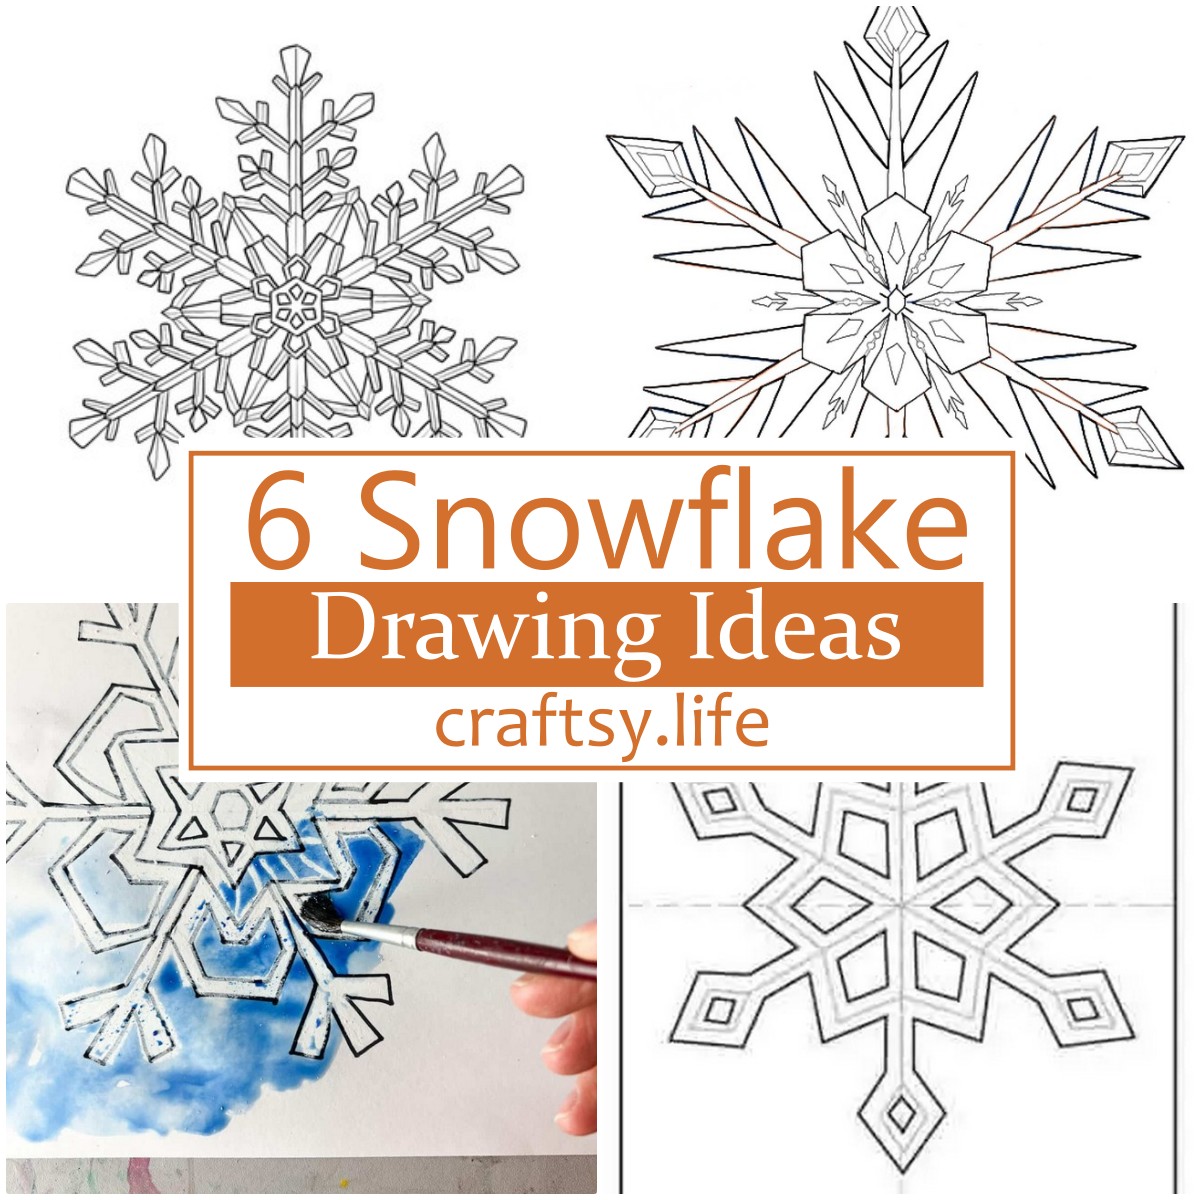 6 Snowflake Drawing Ideas